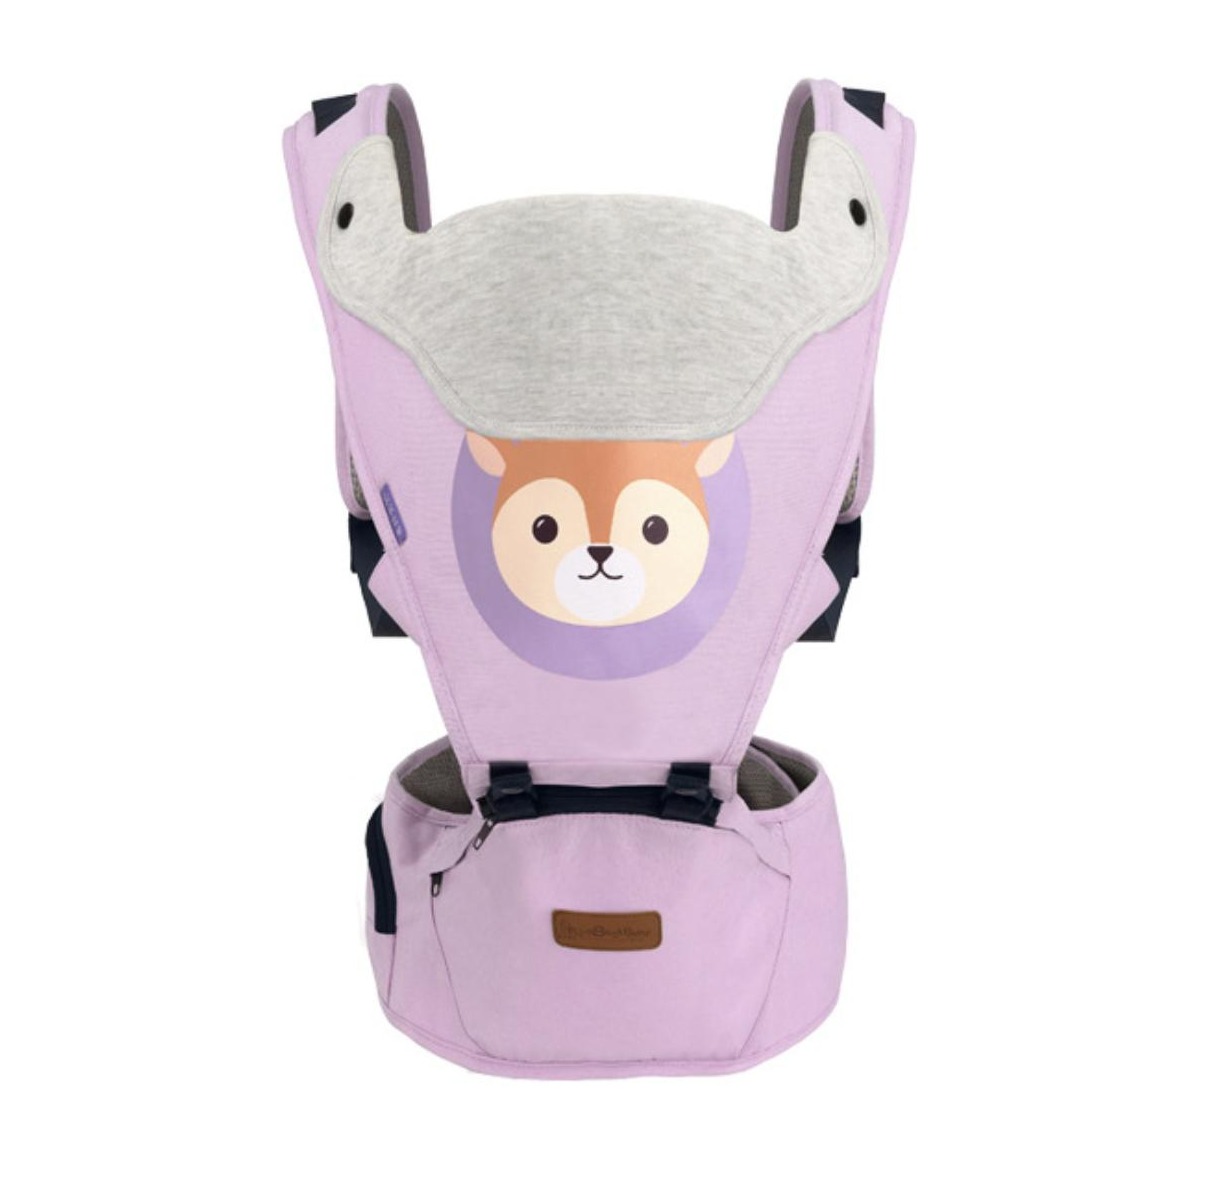 Best Baby เป้อุ้มเด็ก Baby Carriers Backpack Hipseat 4in1 สามารถนั่งและนอนได้ สะพายหน้าและสะพายหลังได้ (แรกเกิด-3ปี)/สีม่วง